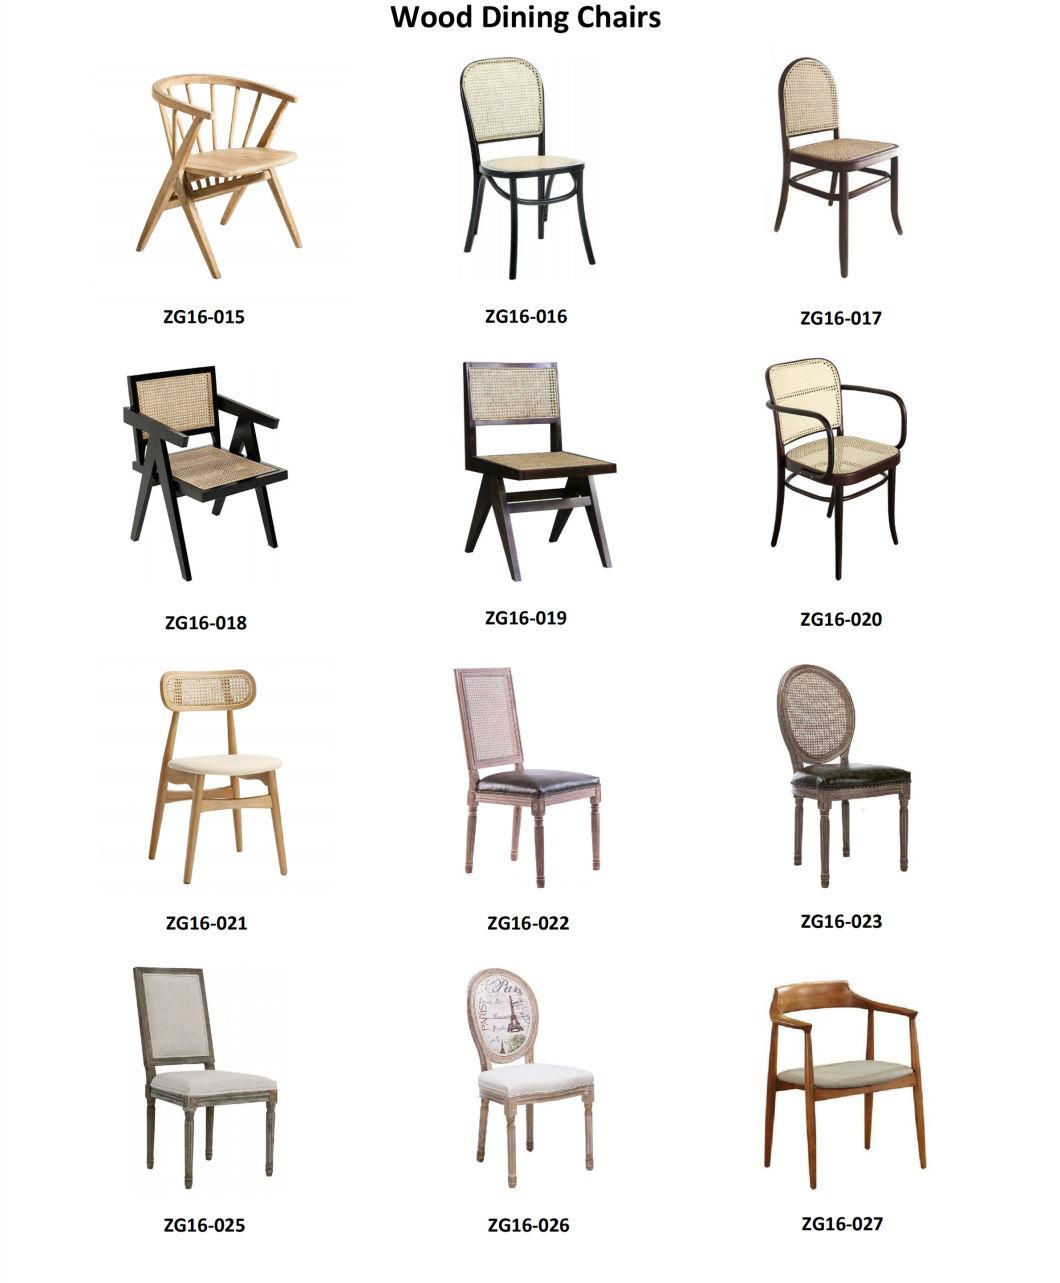 Hot Selling Wood Modern Rattan Garden Furniture Dining Chair (ZG16-016)